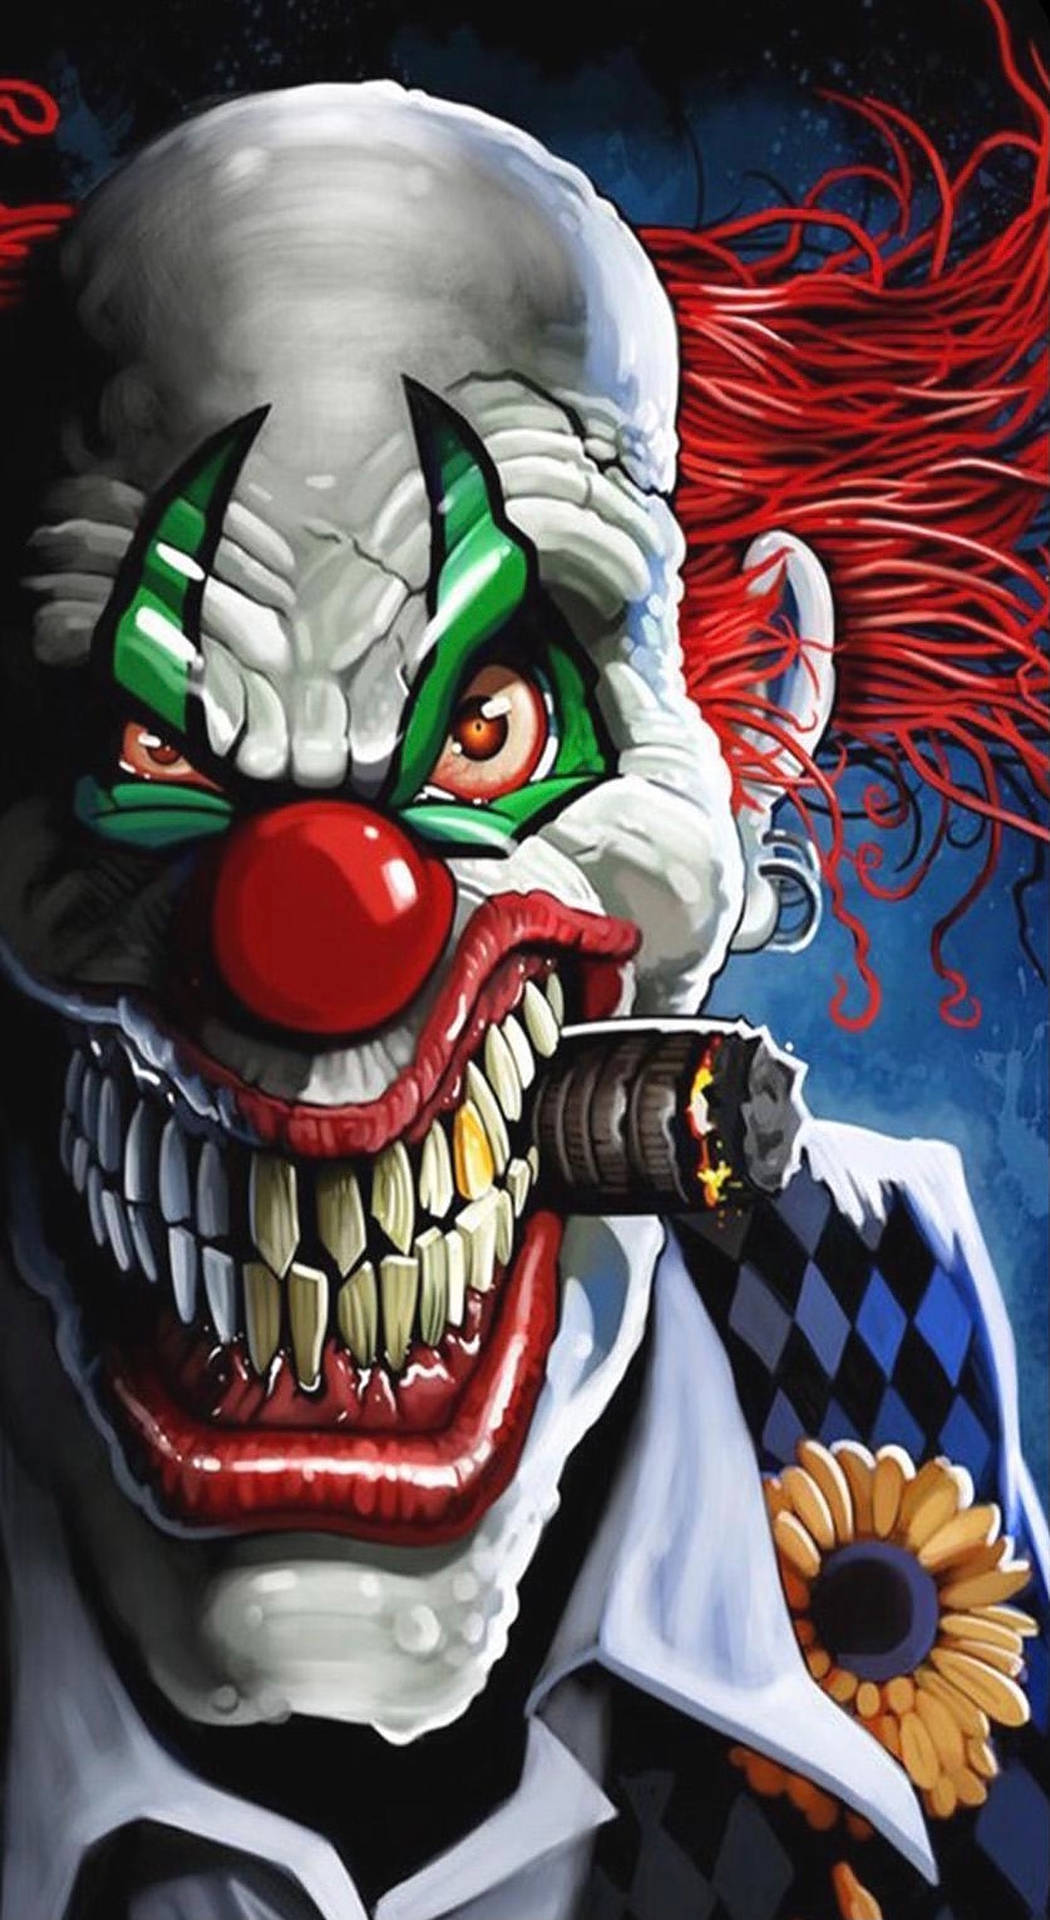 Unleashing Horror: Scary Clown Artwork